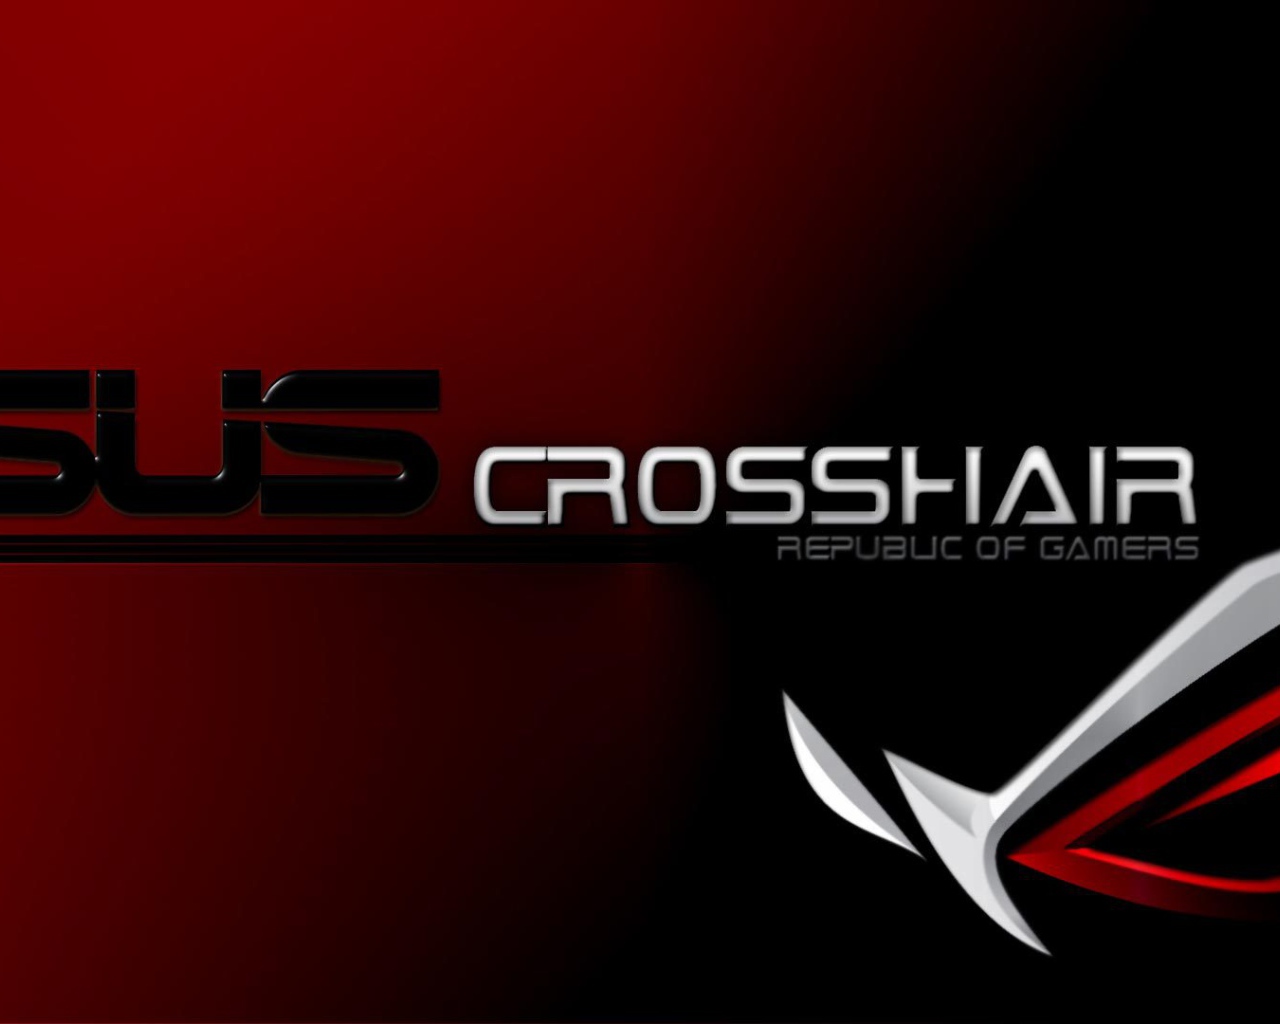 Crosshair компании ASUS